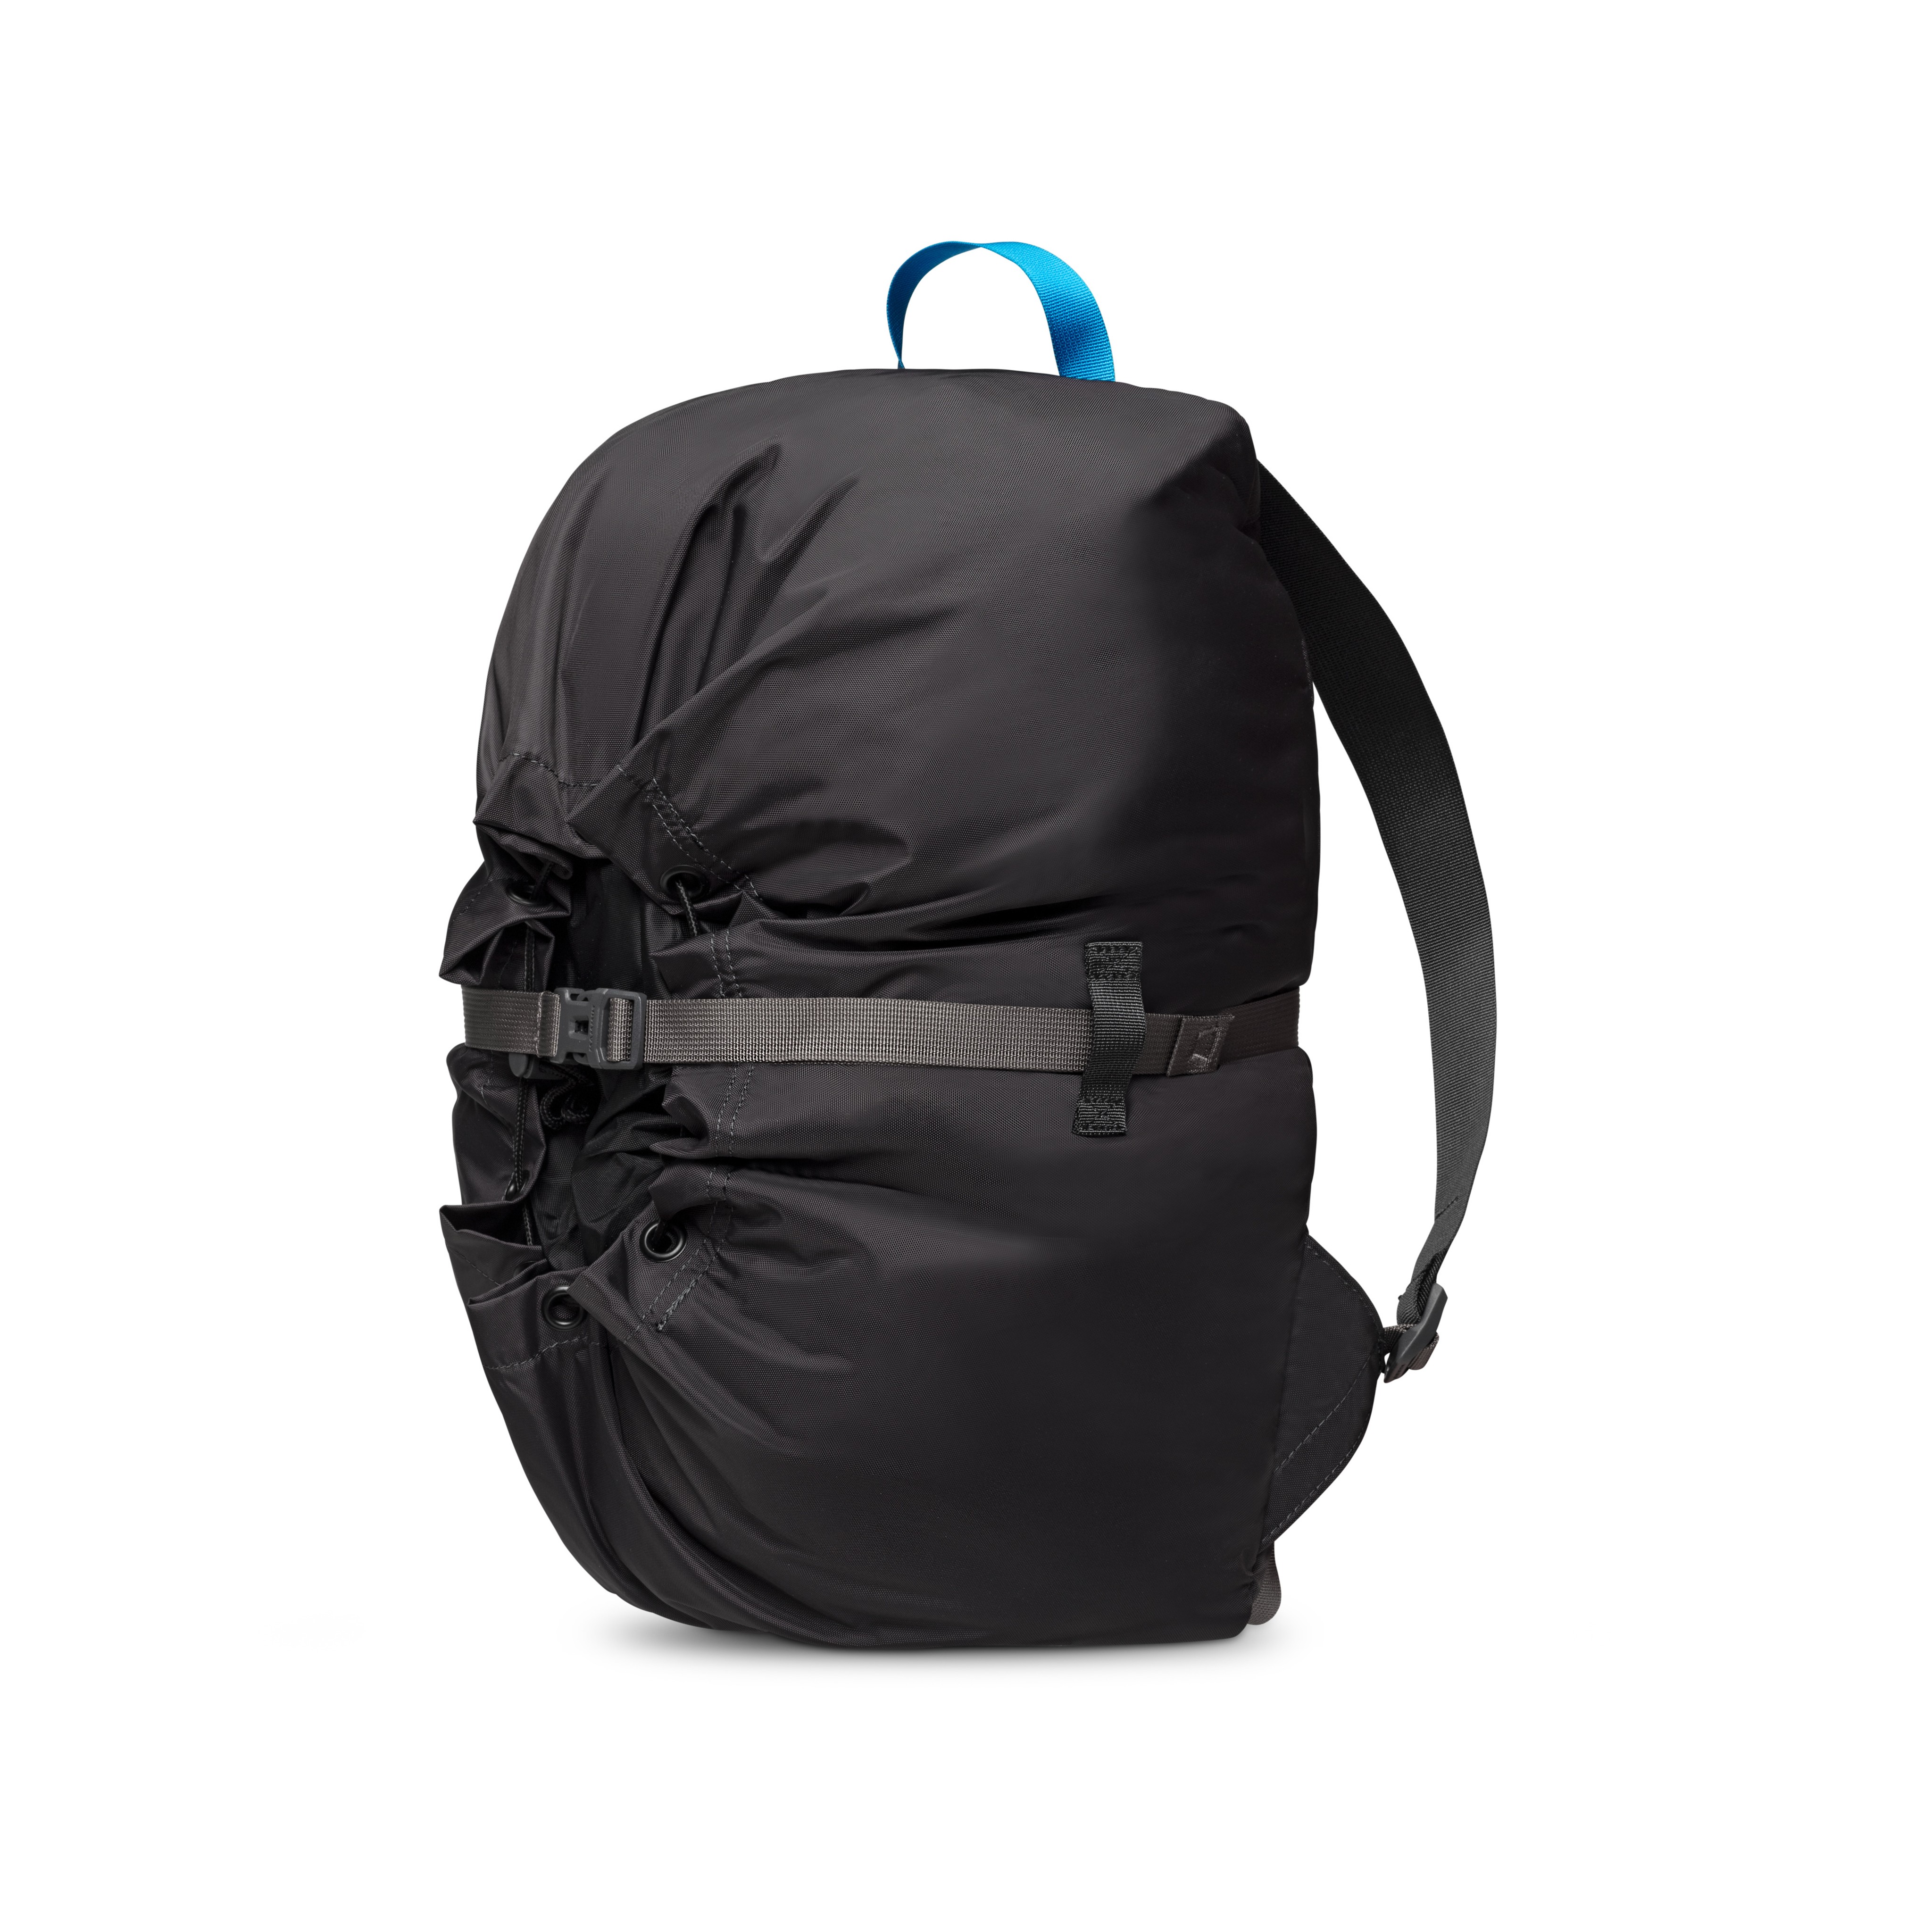 Rope Bag LMNT - black, one size product image